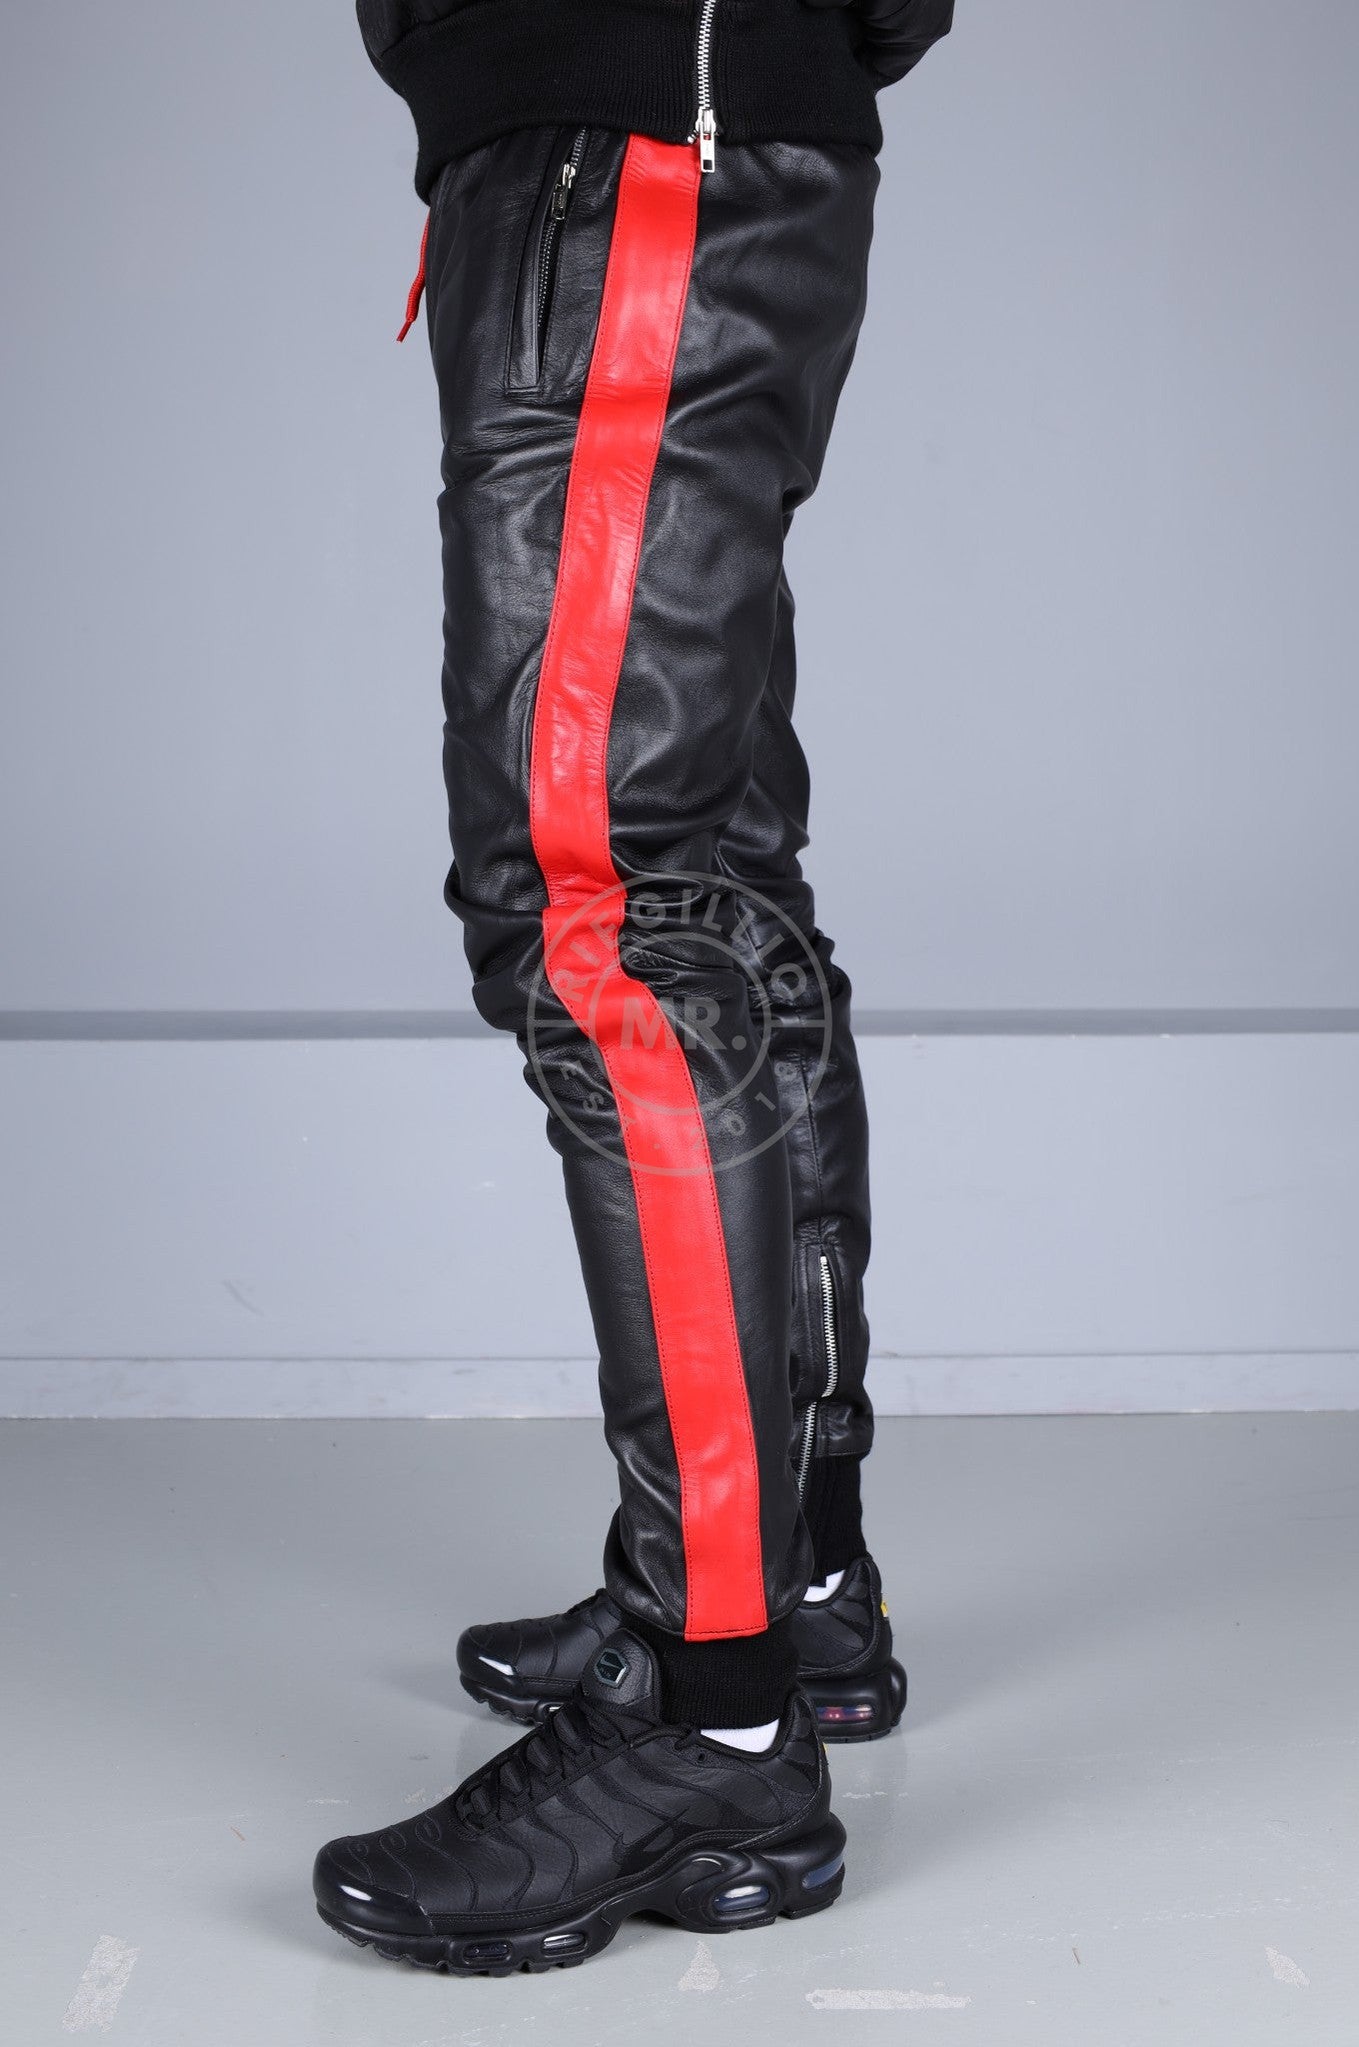 Black Leather Sports Pants - Red Stripe at MR. Riegillio